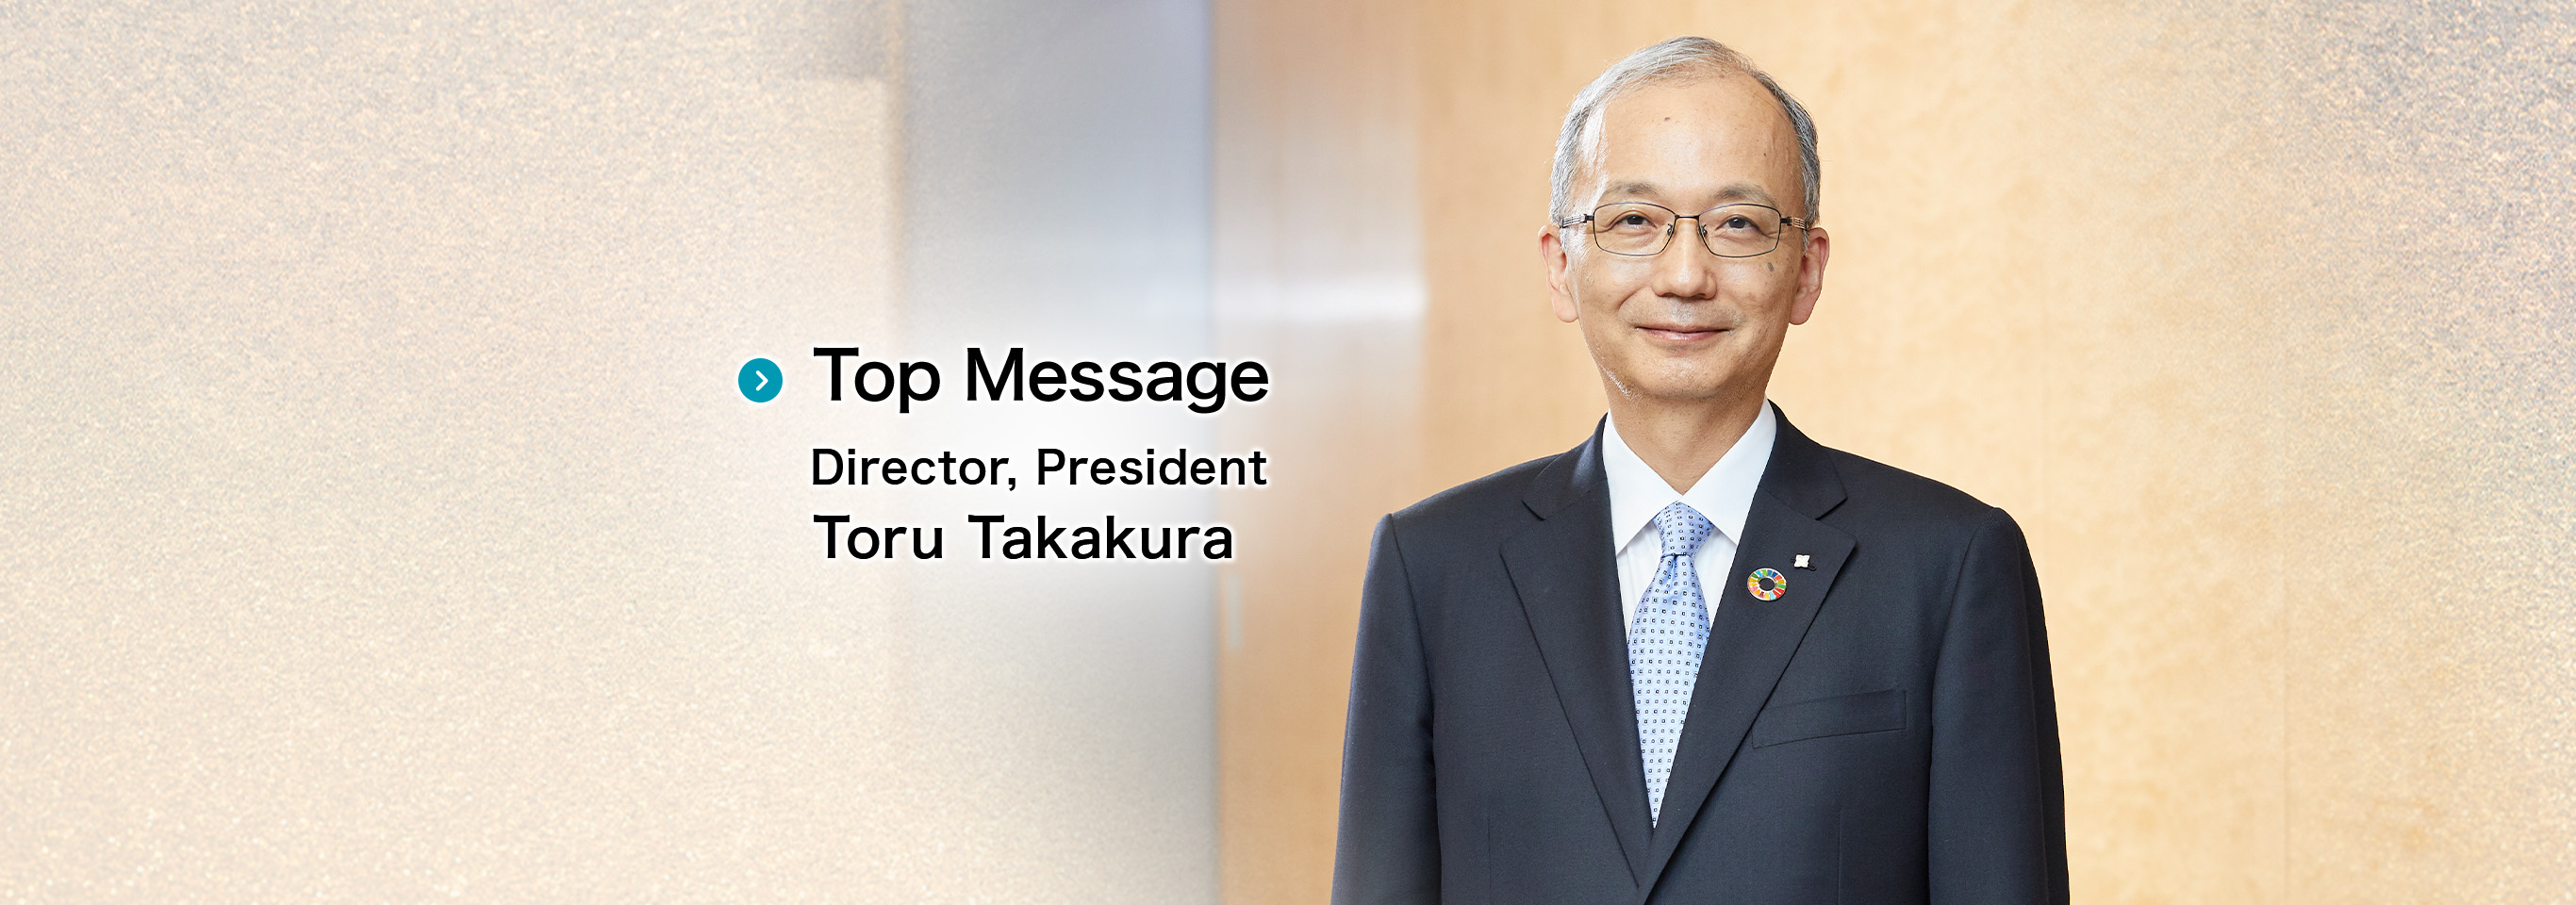 Top Message Director, President Toru Takakura